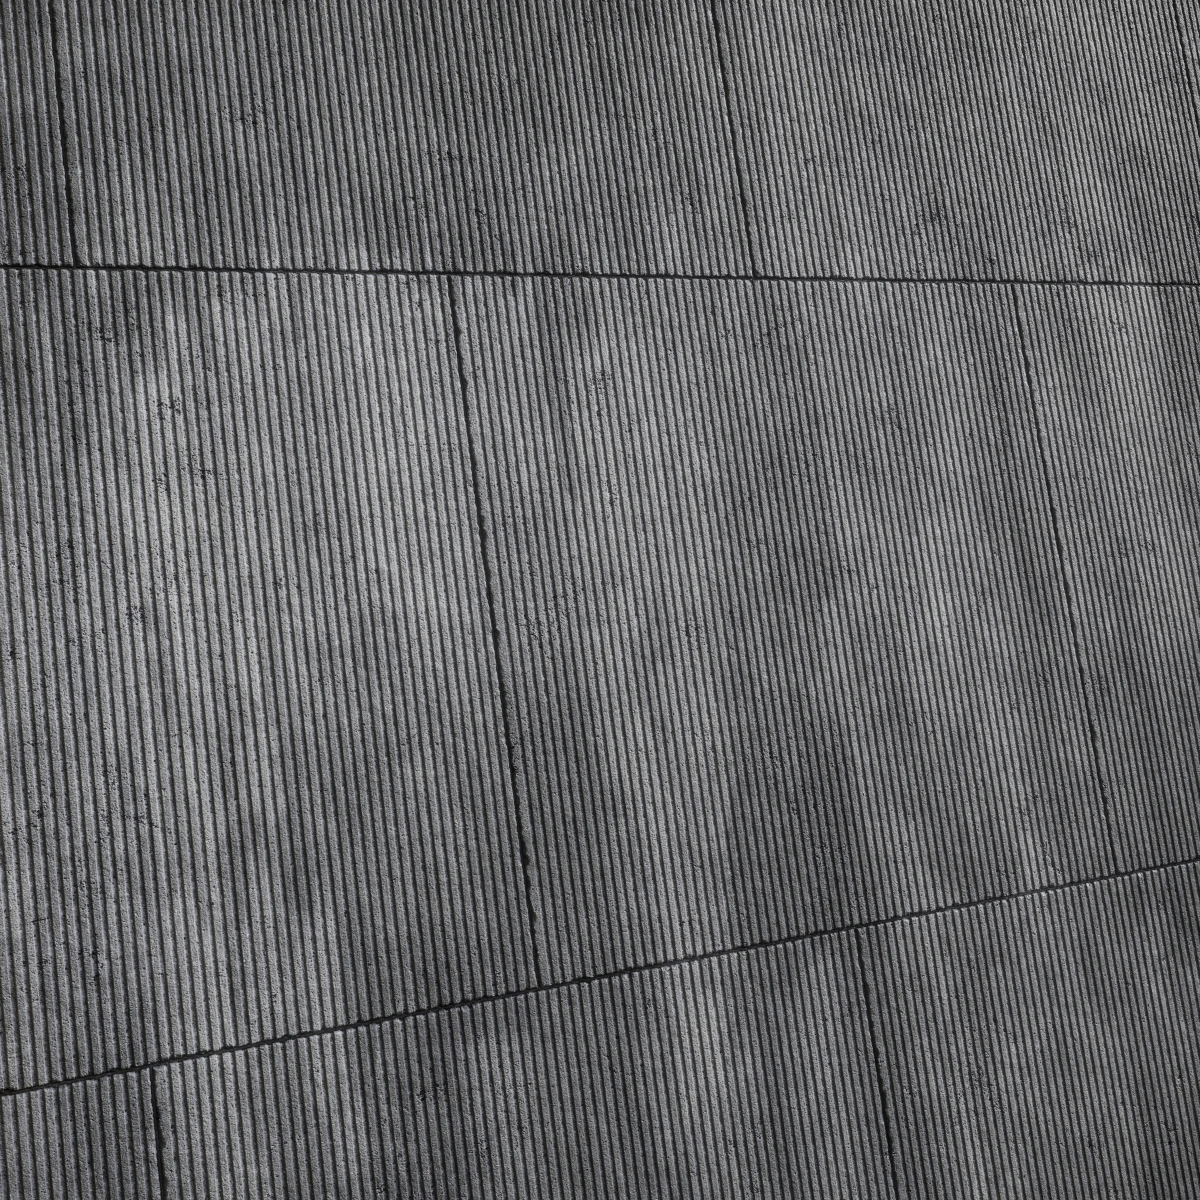 Striped Concrete Slabs PBR Texture